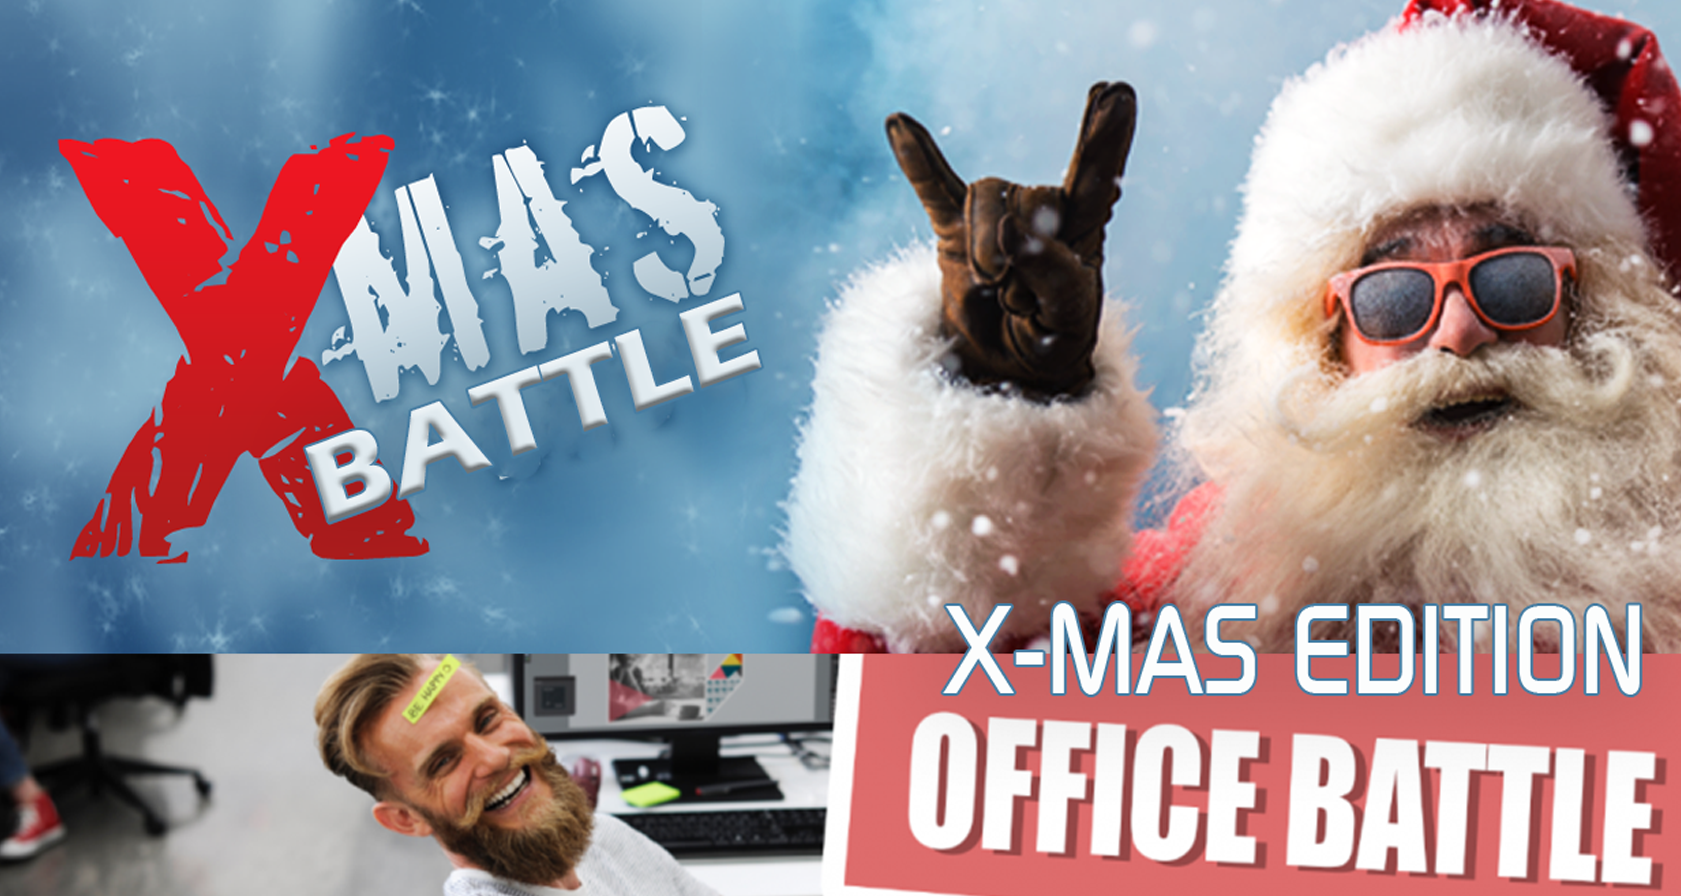 Dinerspel teamuitje: X-mas Office battle